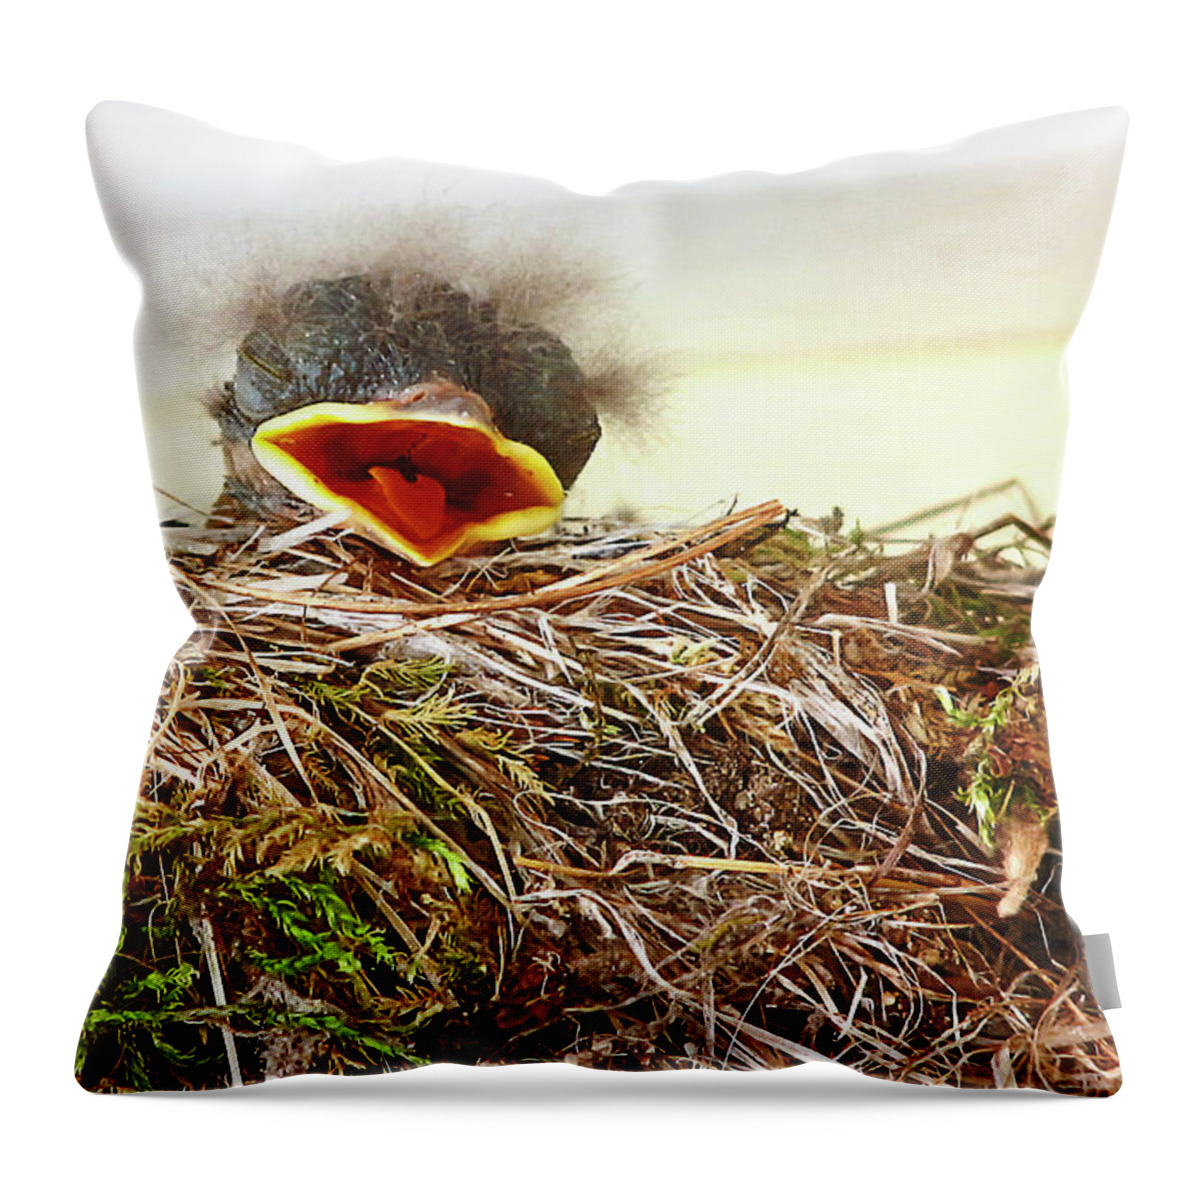 Bird Throw Pillow featuring the photograph Baby Bird by Natalie Rotman Cote